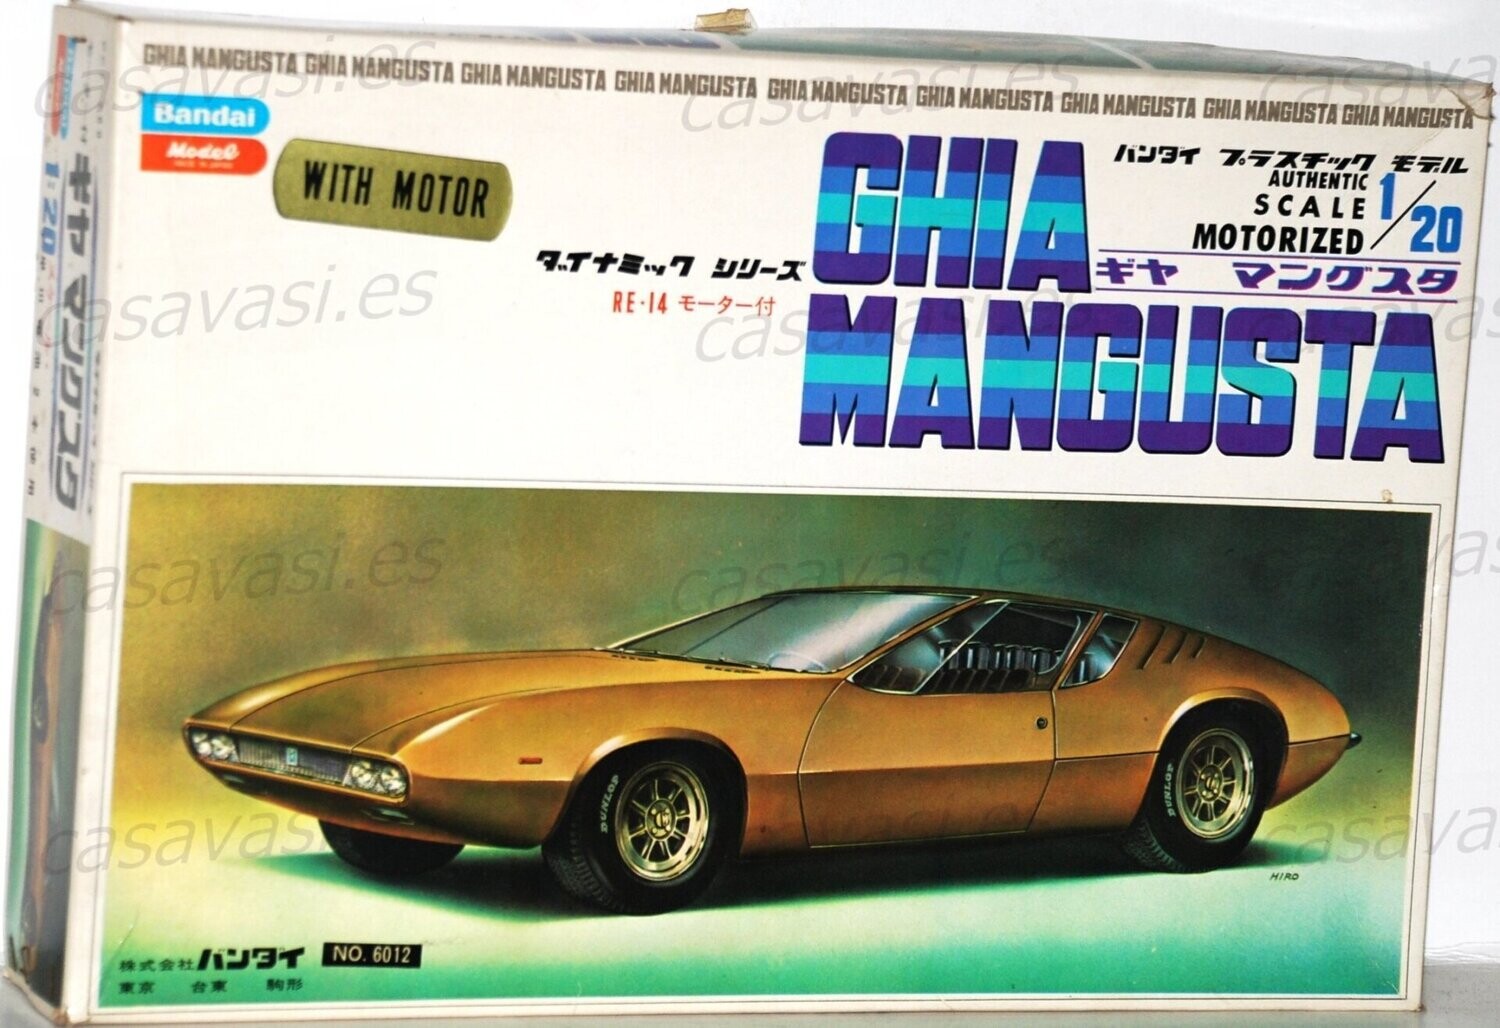 Bandai - pc7-700 -No.6012 -1/20 - Guia Mangusta - with MOTOR
Box Size - 36 x 24 cm.